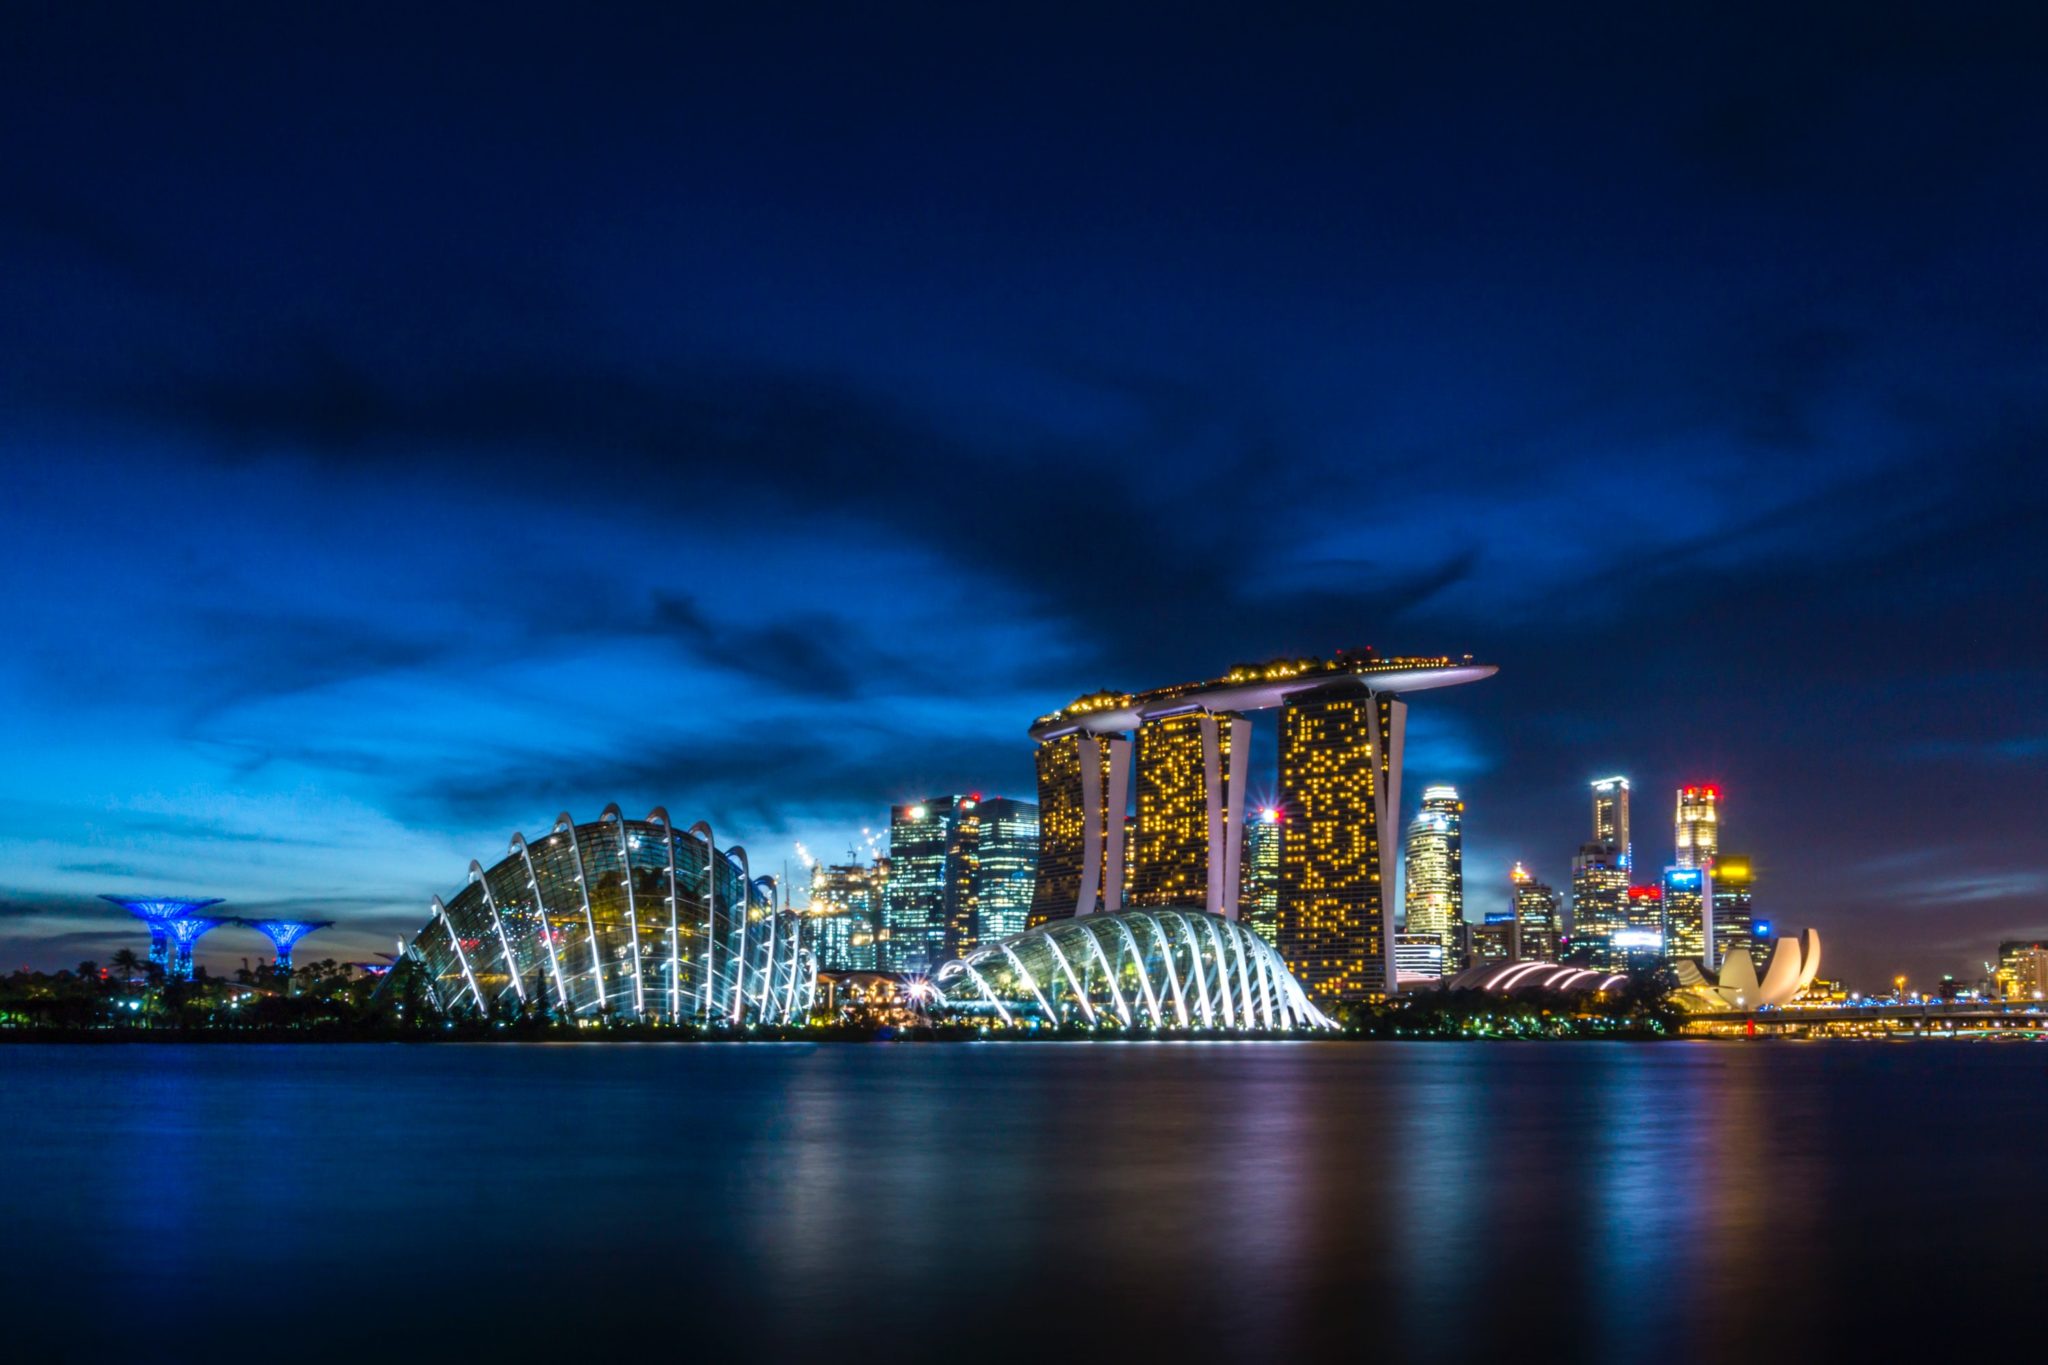 Singapur, miasto, miasto państwo, miasto nocą, Marina Bay, wieżowce, zwiedzanie nocą, Singapur nocą